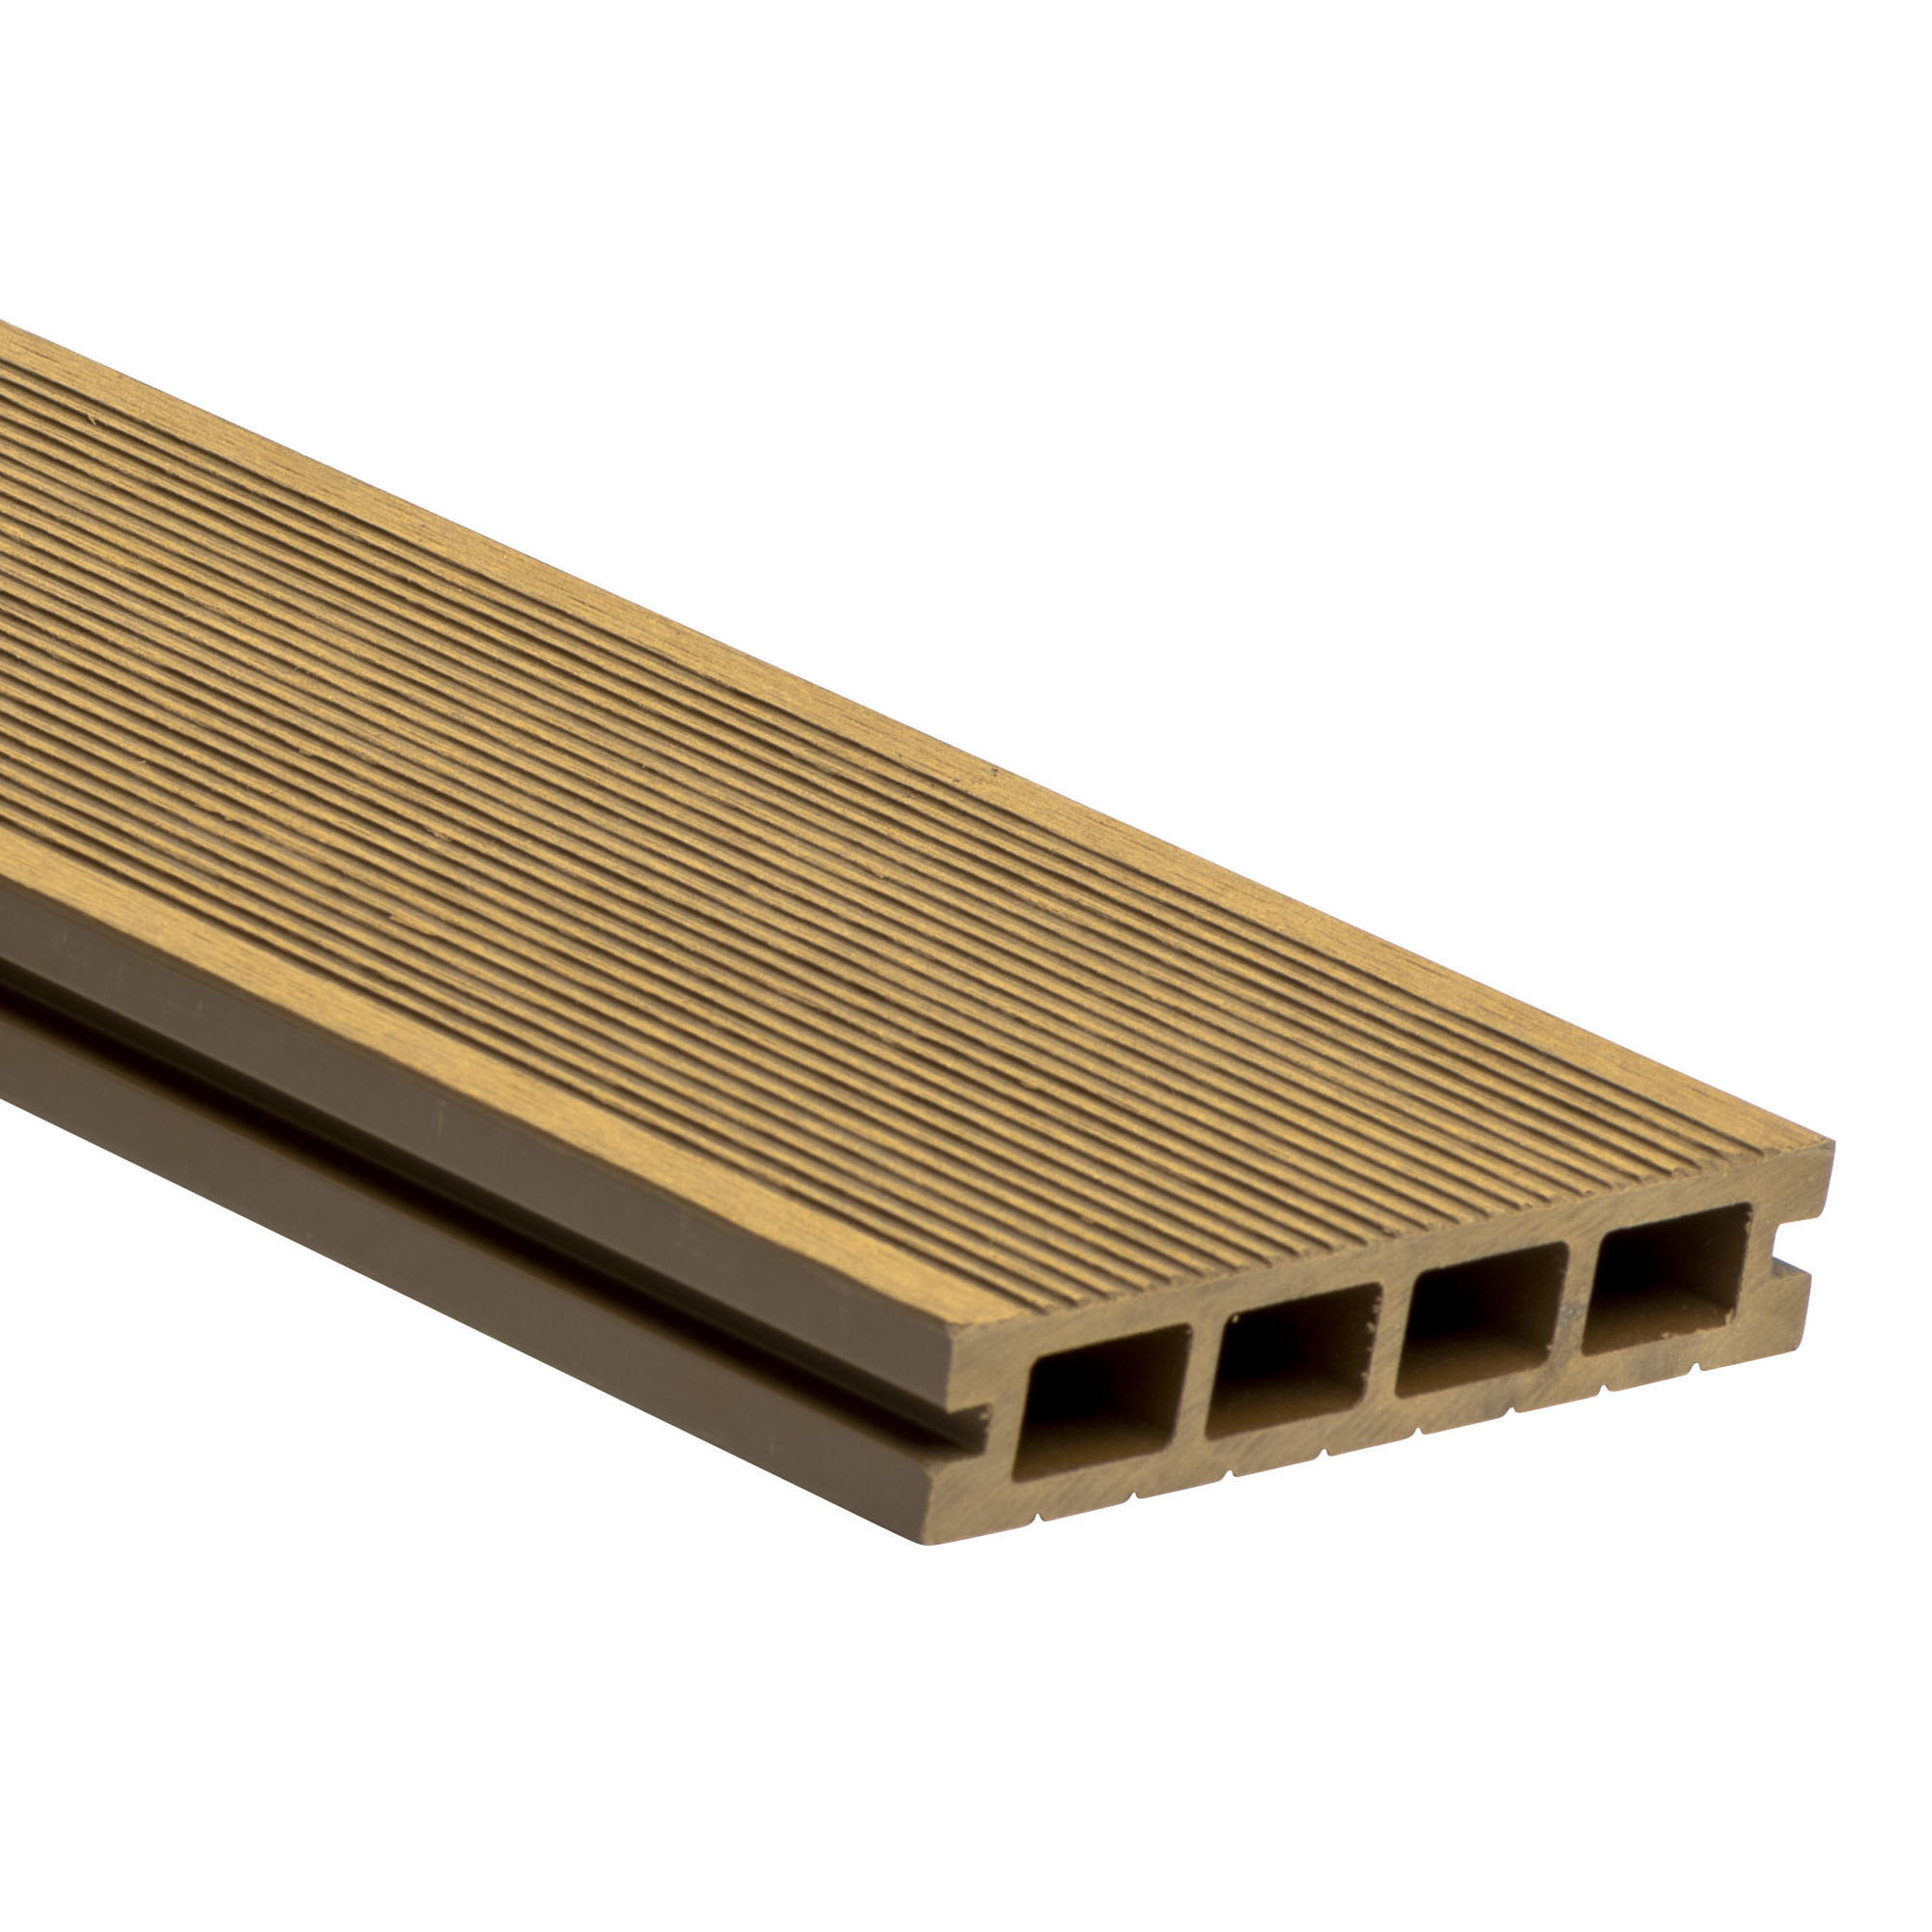 Prkno terasové WPC PERI OSK duté original wood 25×140×4000 mm